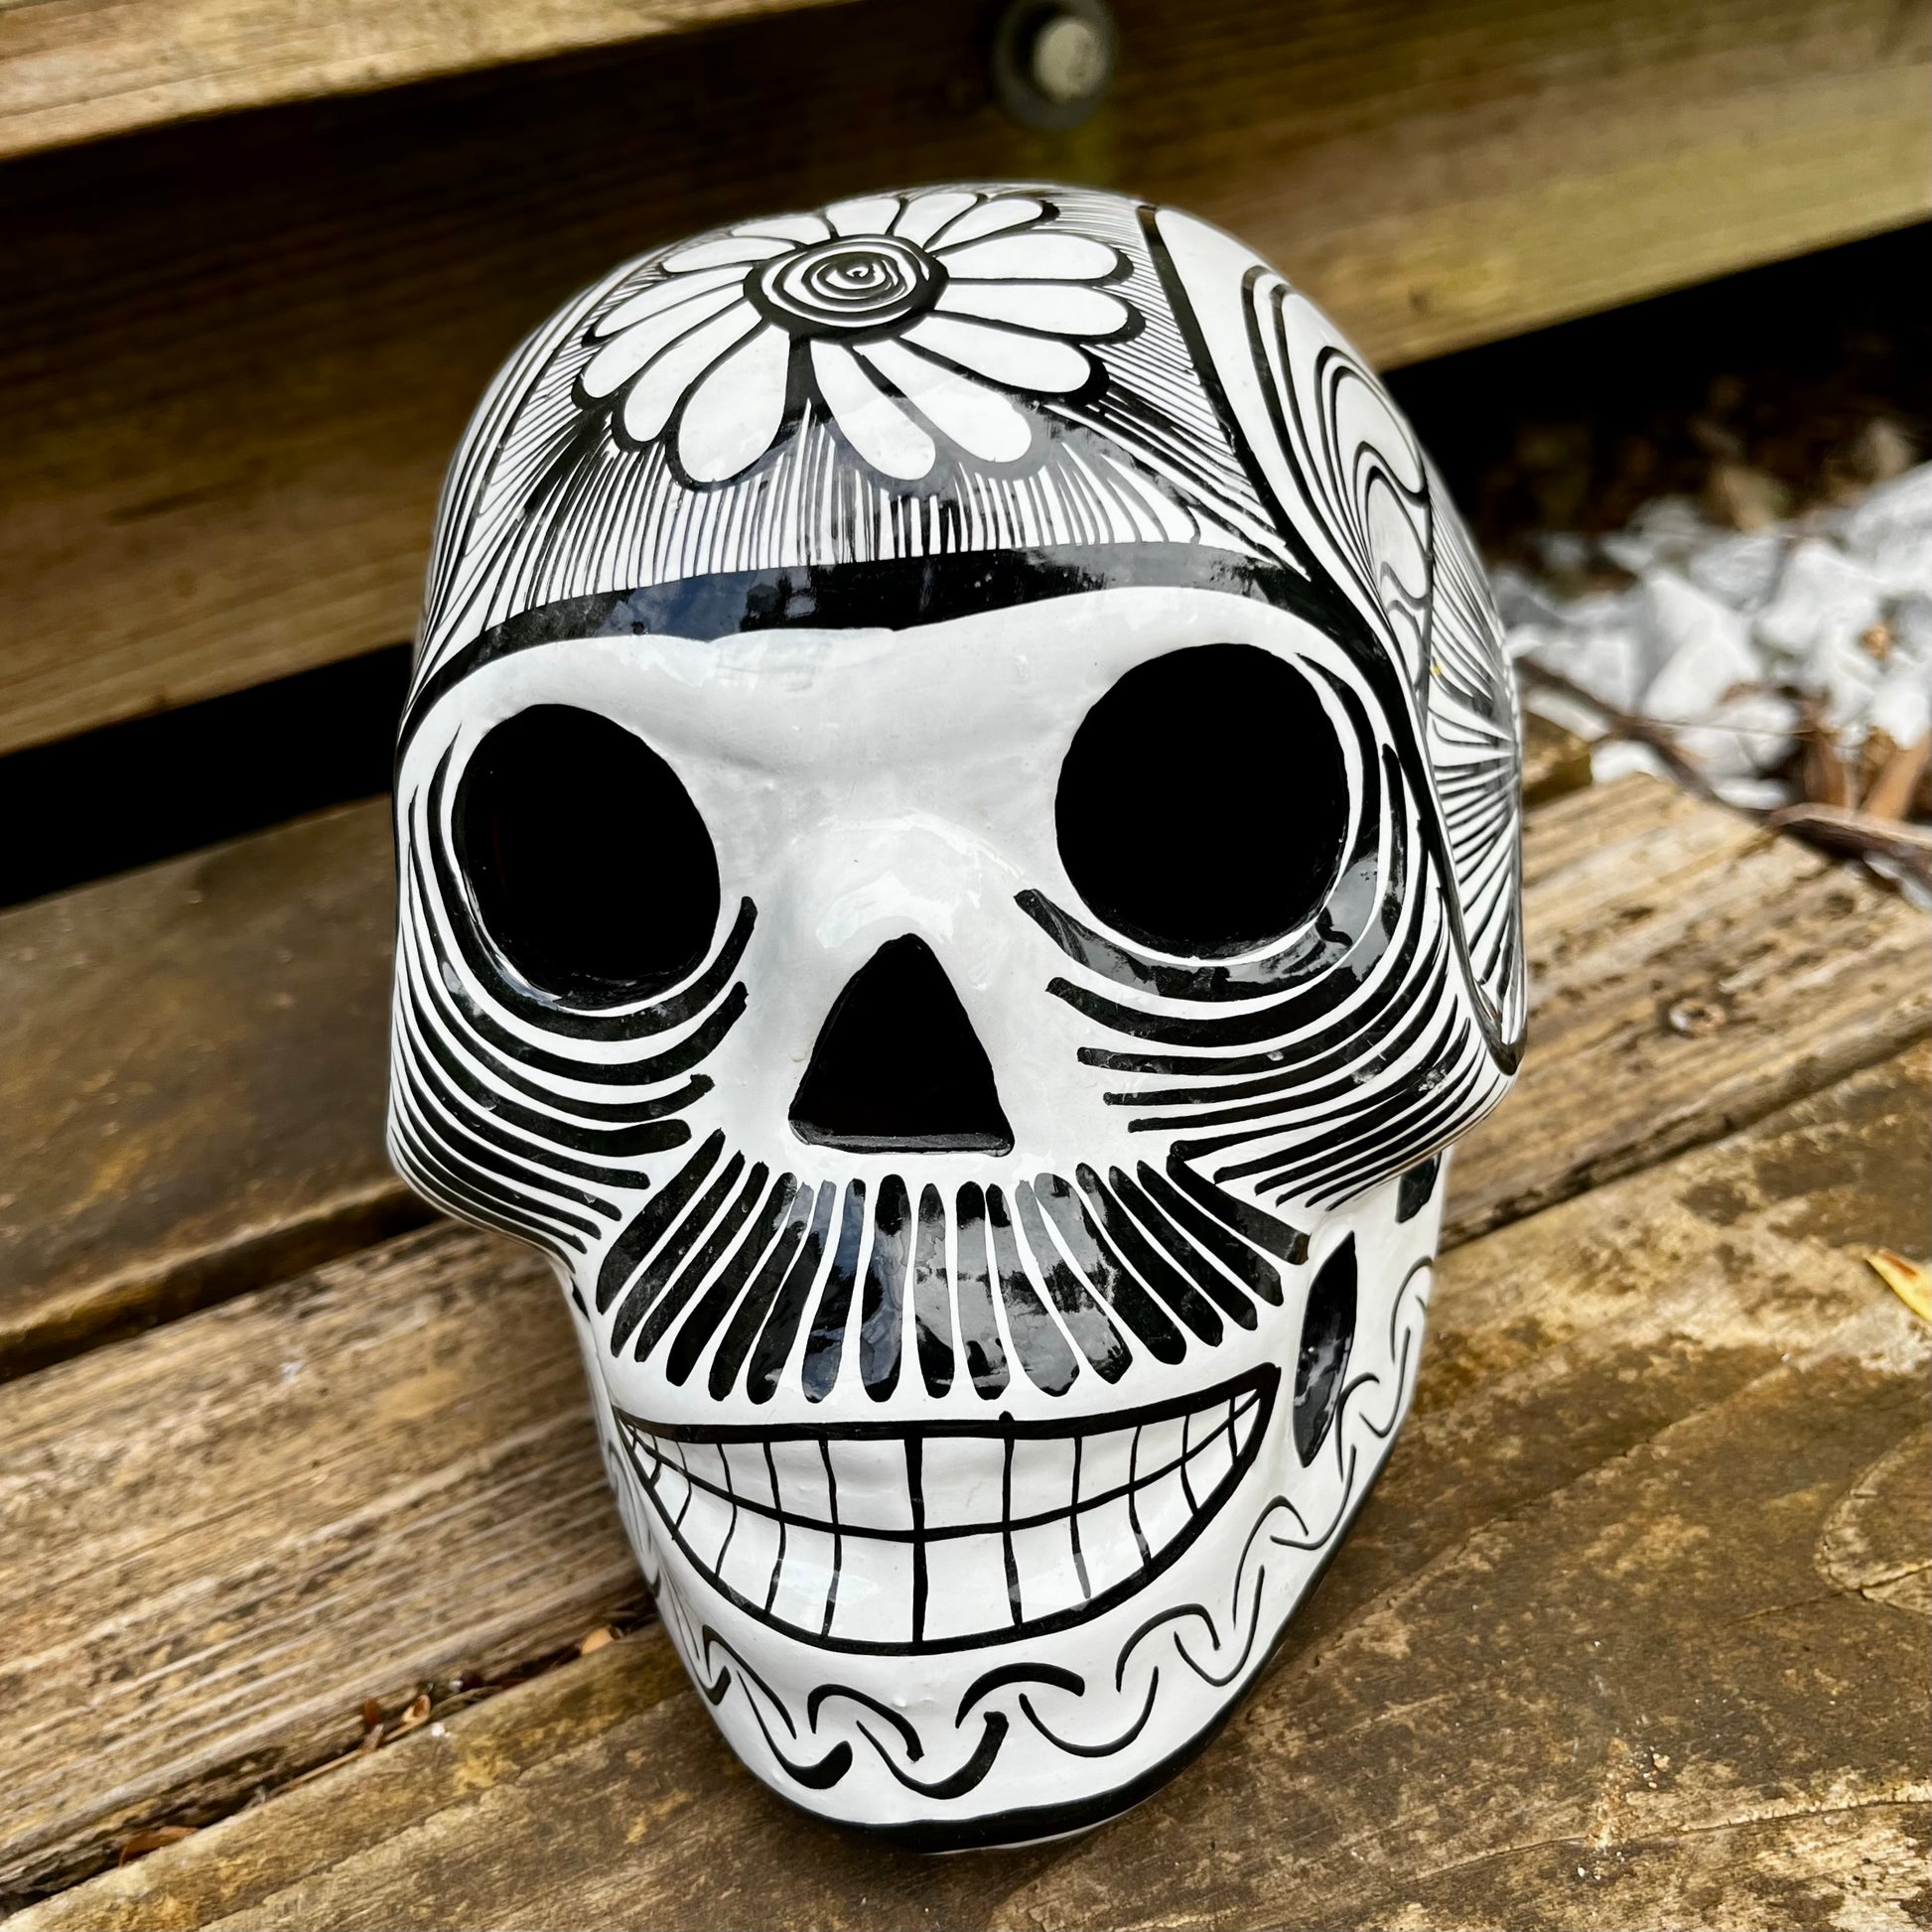 Painted sugar skull front